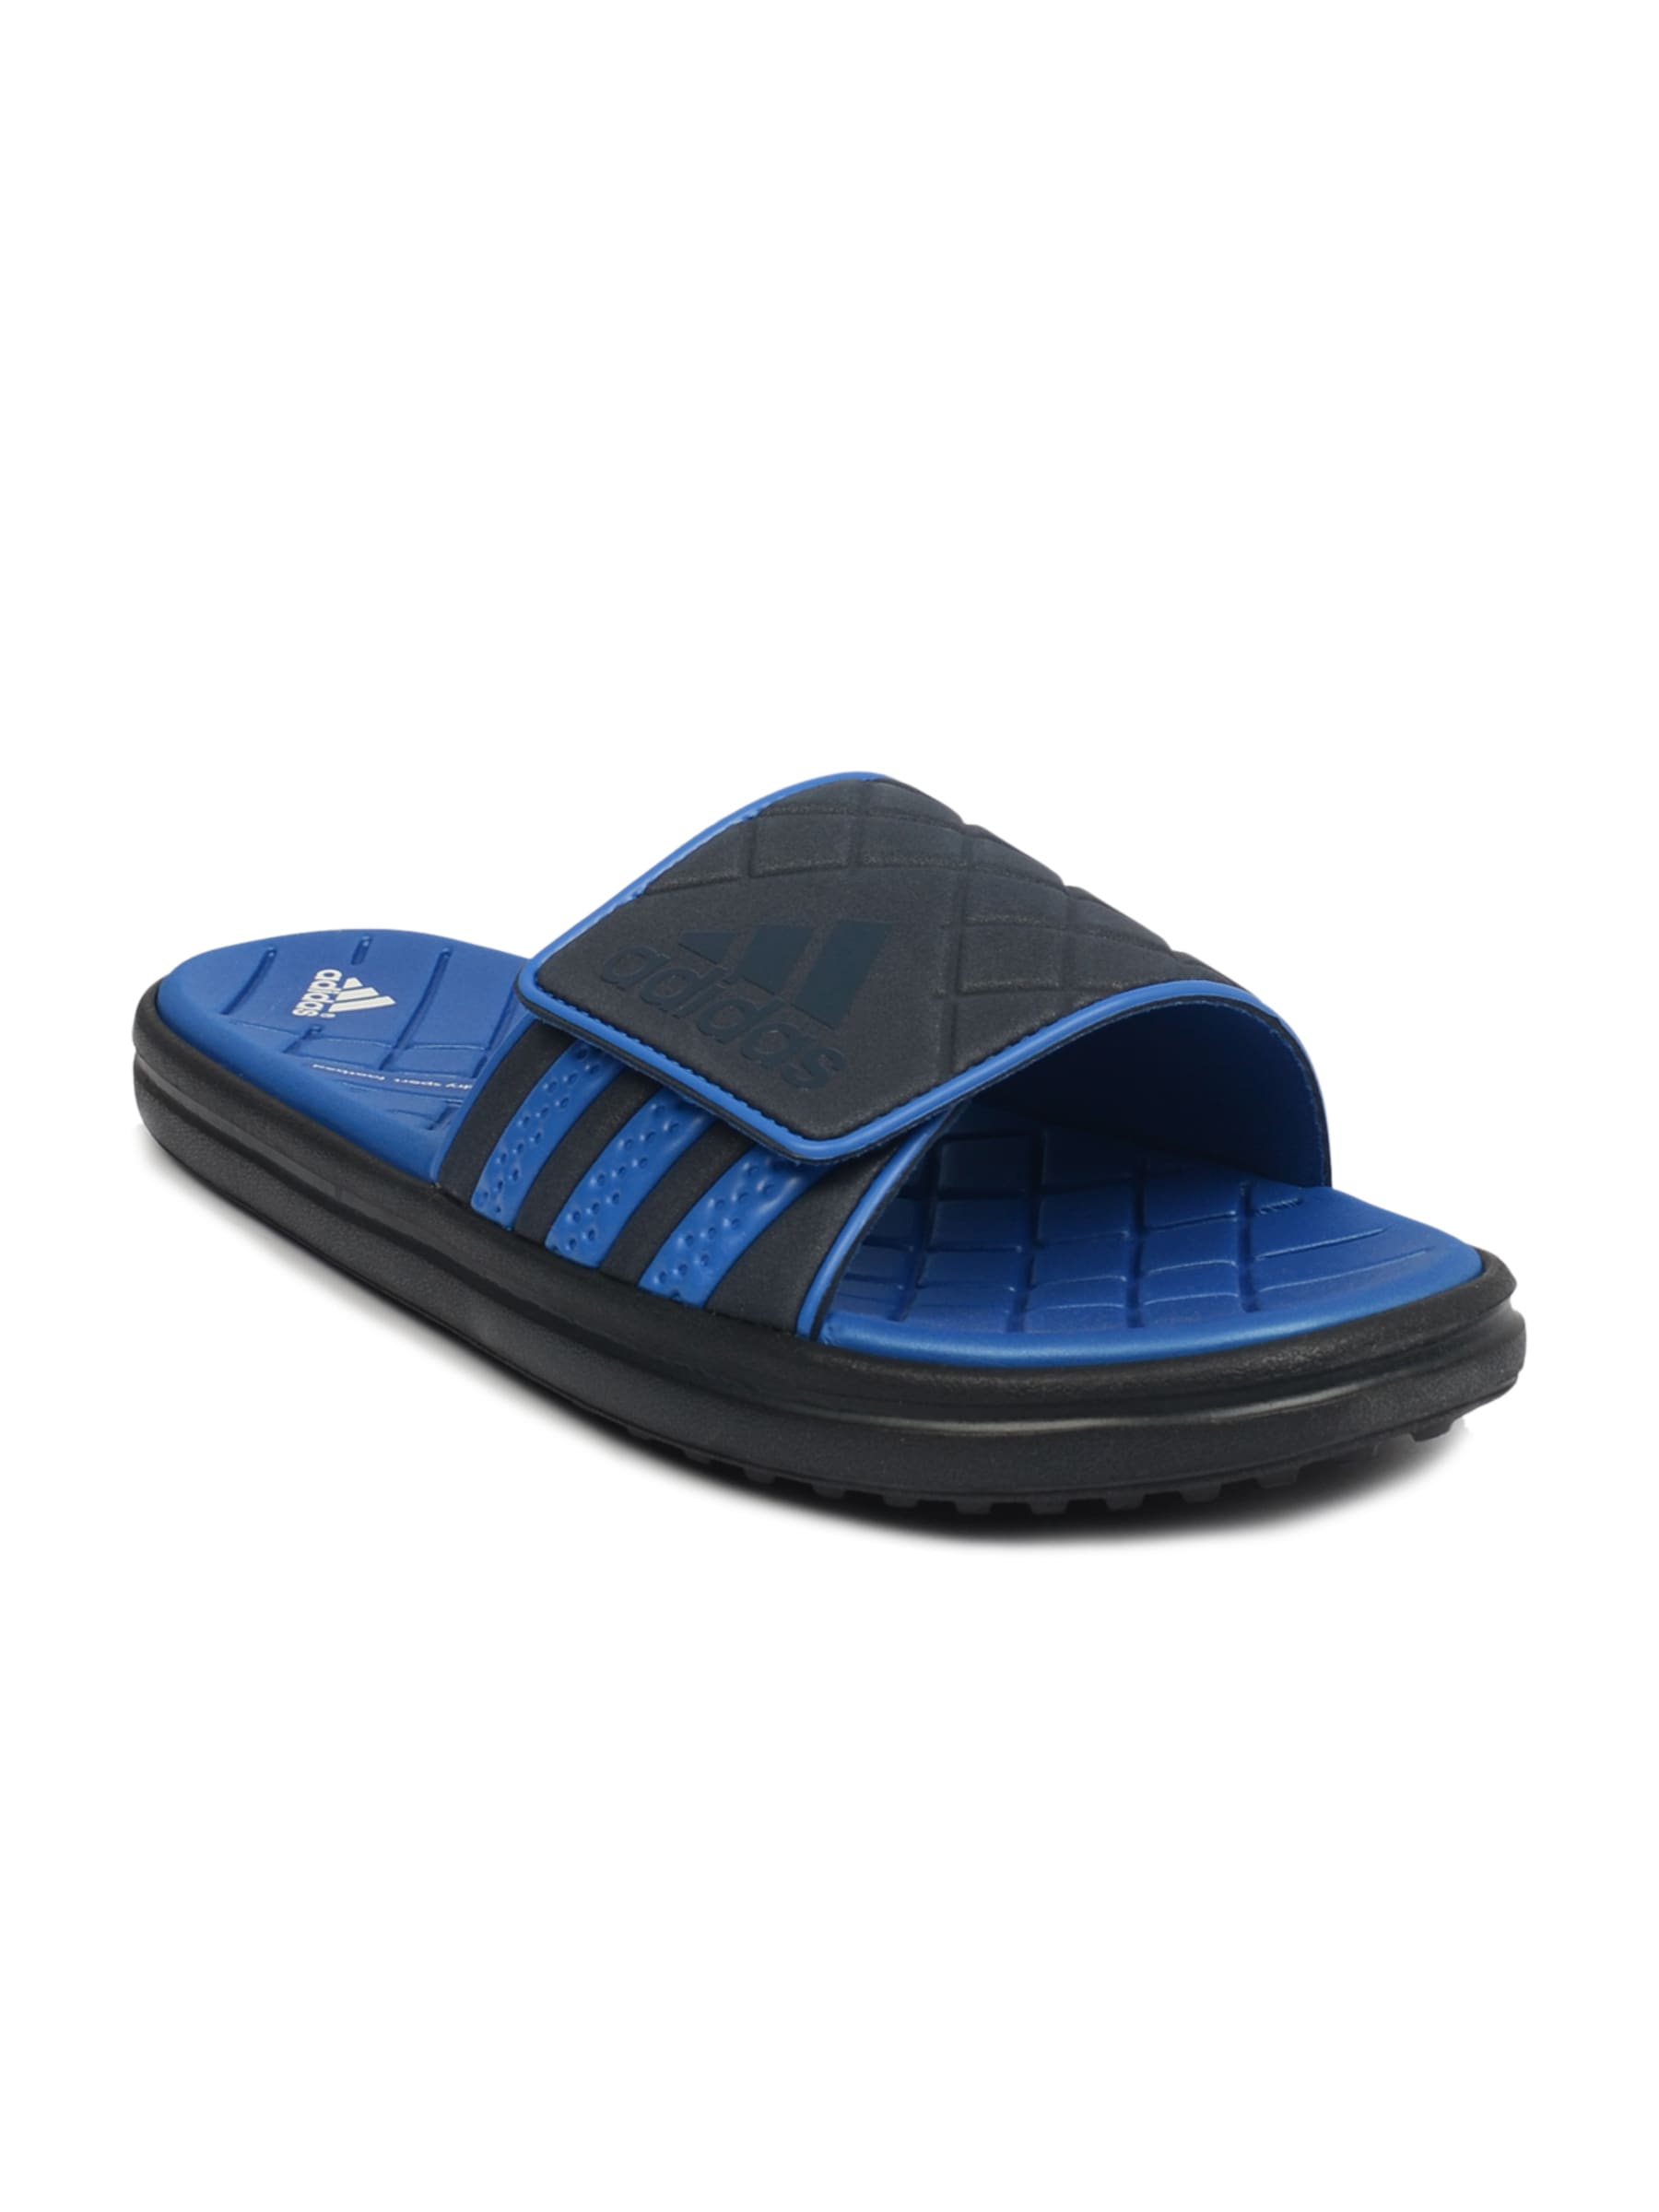 ADIDAS Men Zeitfrei Slide Sc Blue Sandals